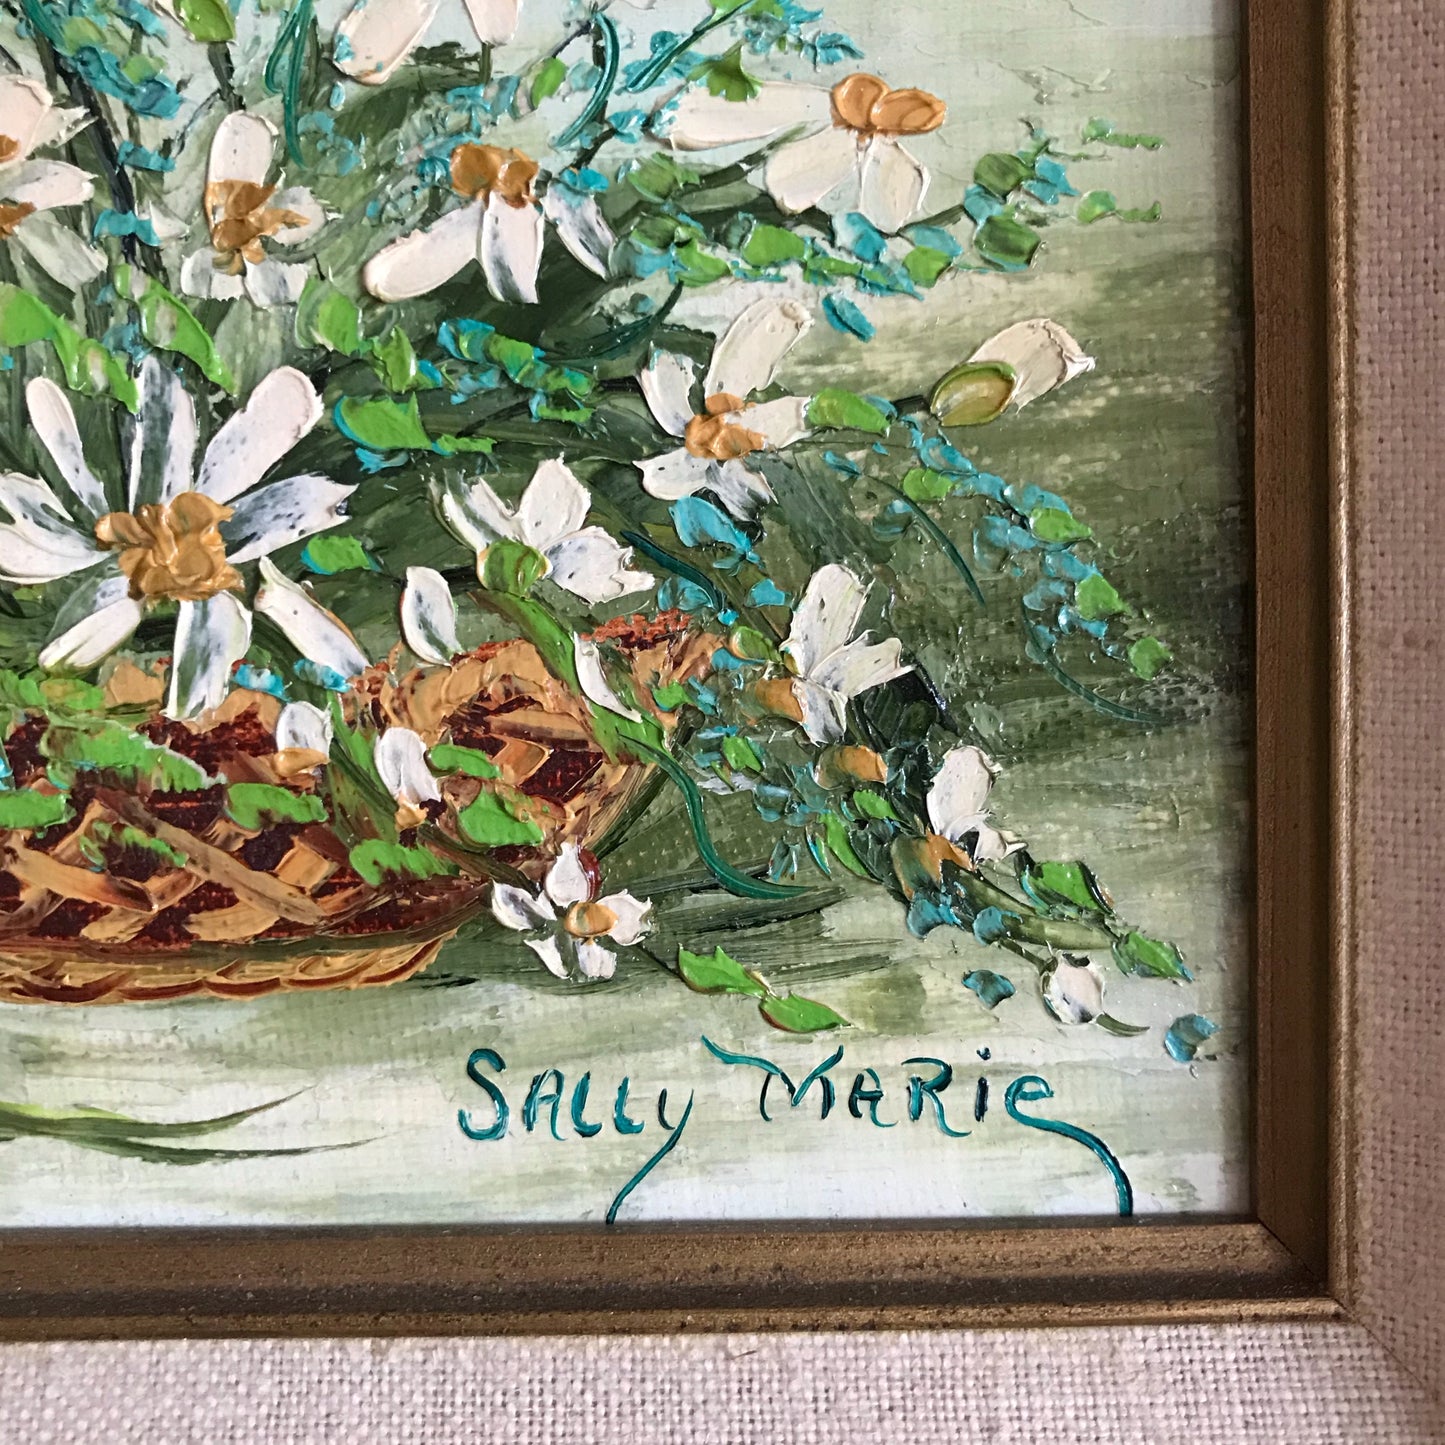 Original Vintage Floral Still-life Painting